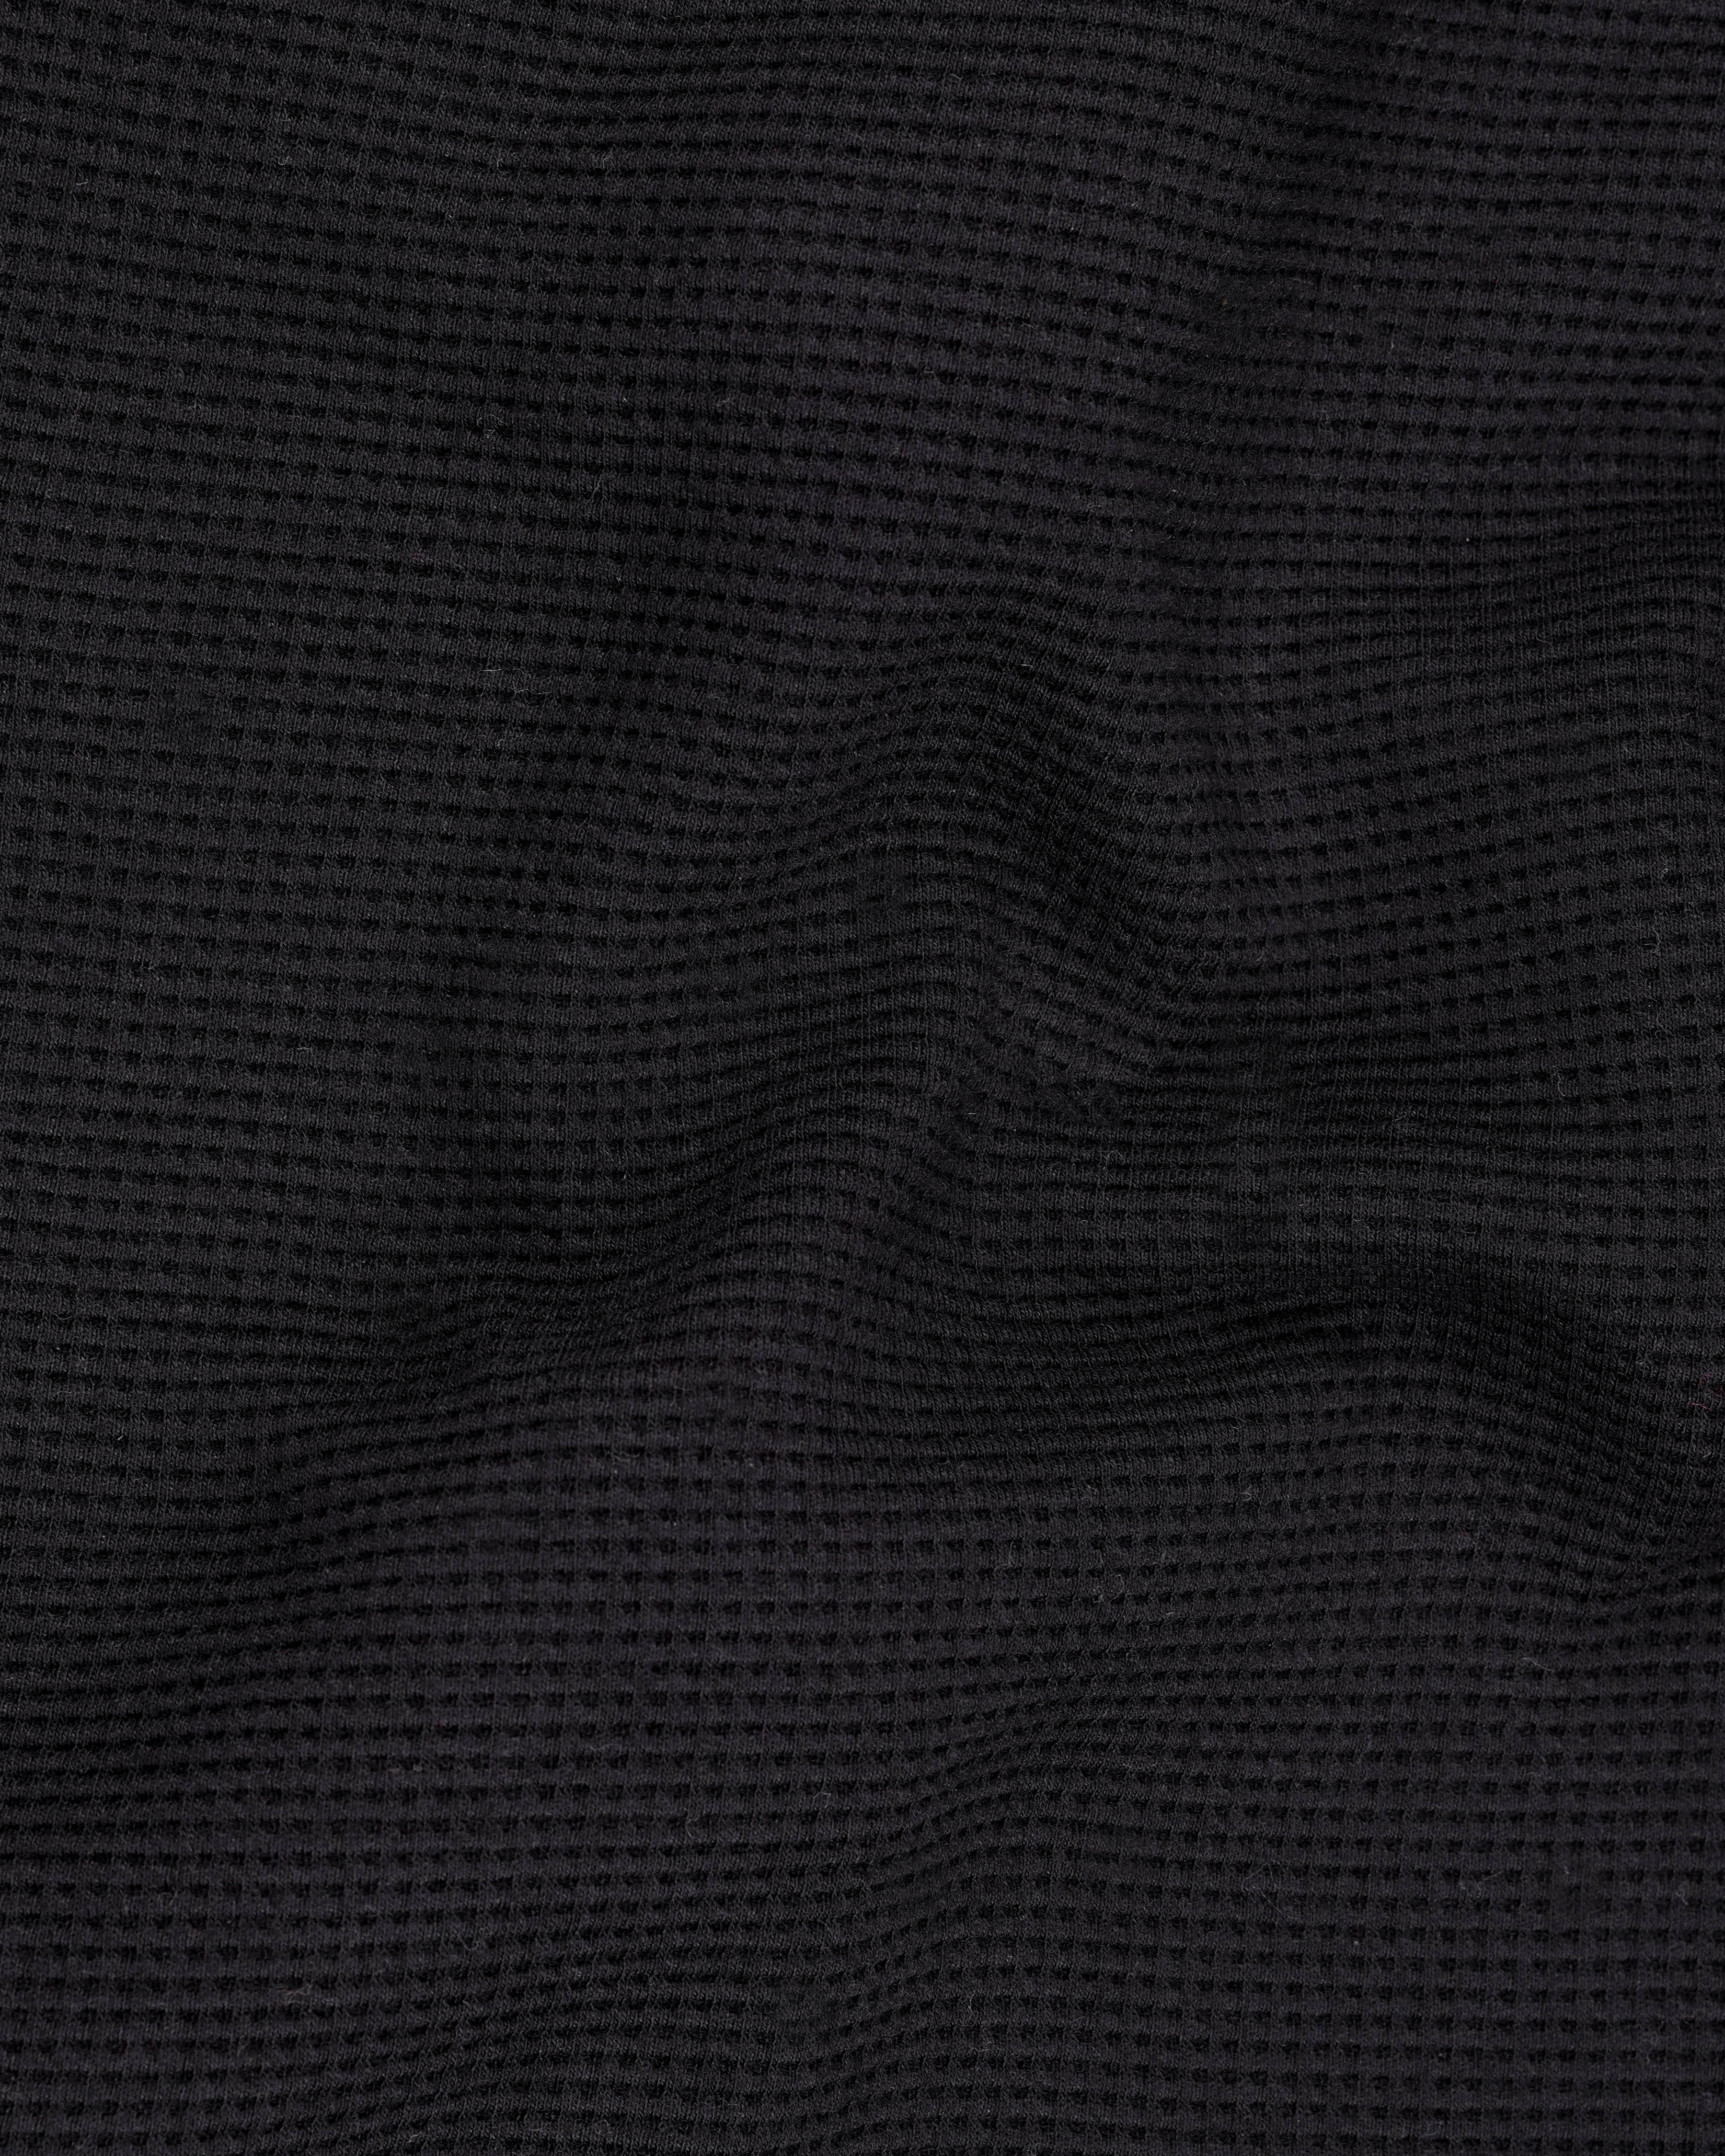 Jade Black Full Sleeve Premium Cotton Textured Sweatshirt TS624-J, TS624-M, TS624-L, TS624-XL, TS624-XXL, TS624-3XL, TS624-4XL